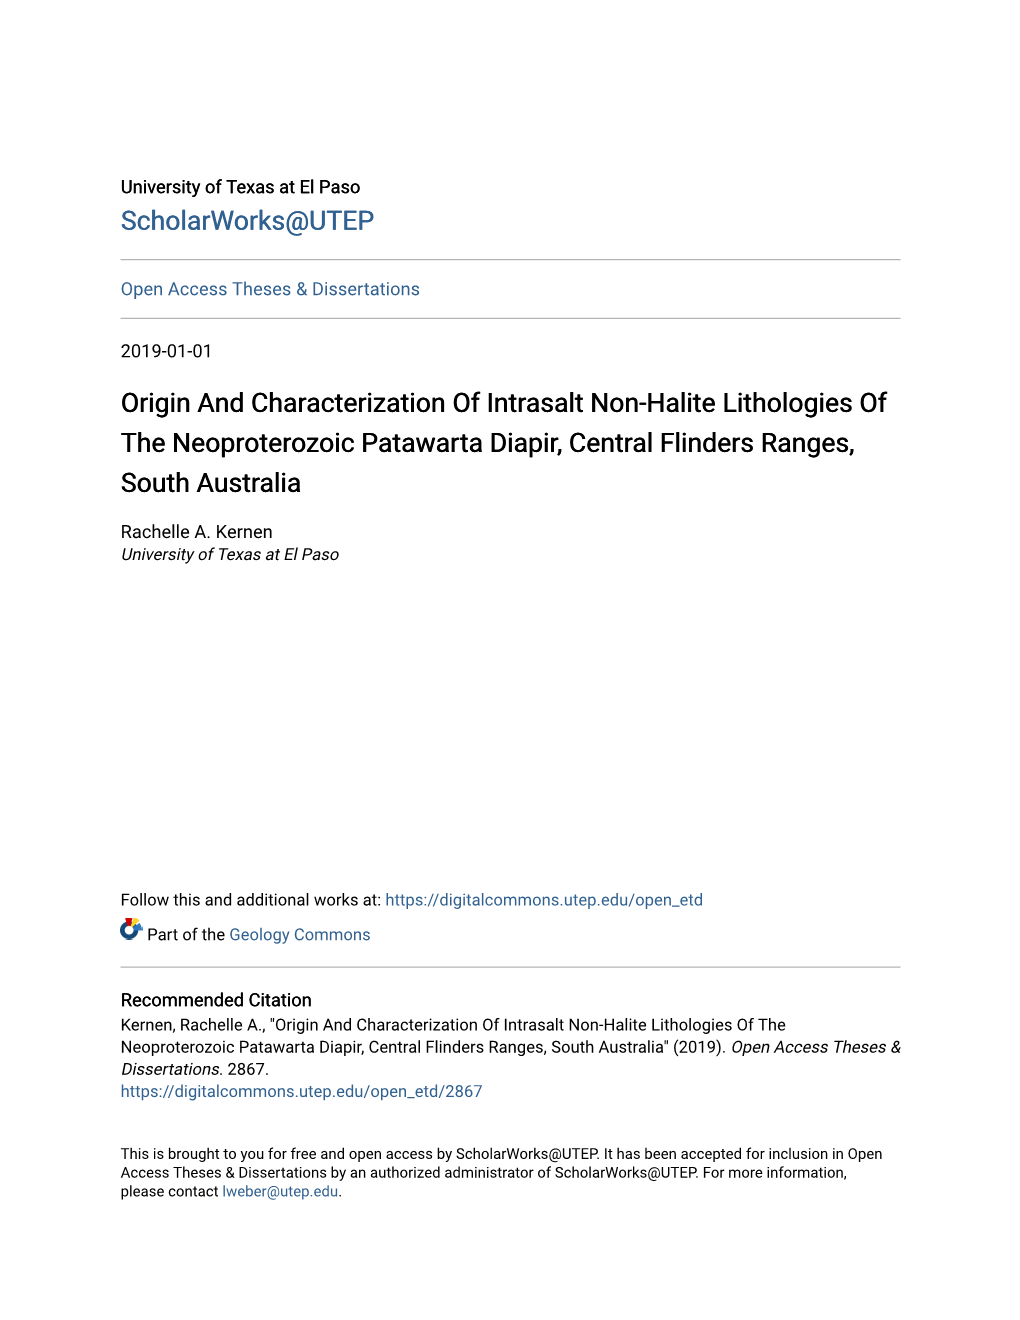 Origin and Characterization of Intrasalt Non-Halite Lithologies of the Neoproterozoic Patawarta Diapir, Central Flinders Ranges, South Australia